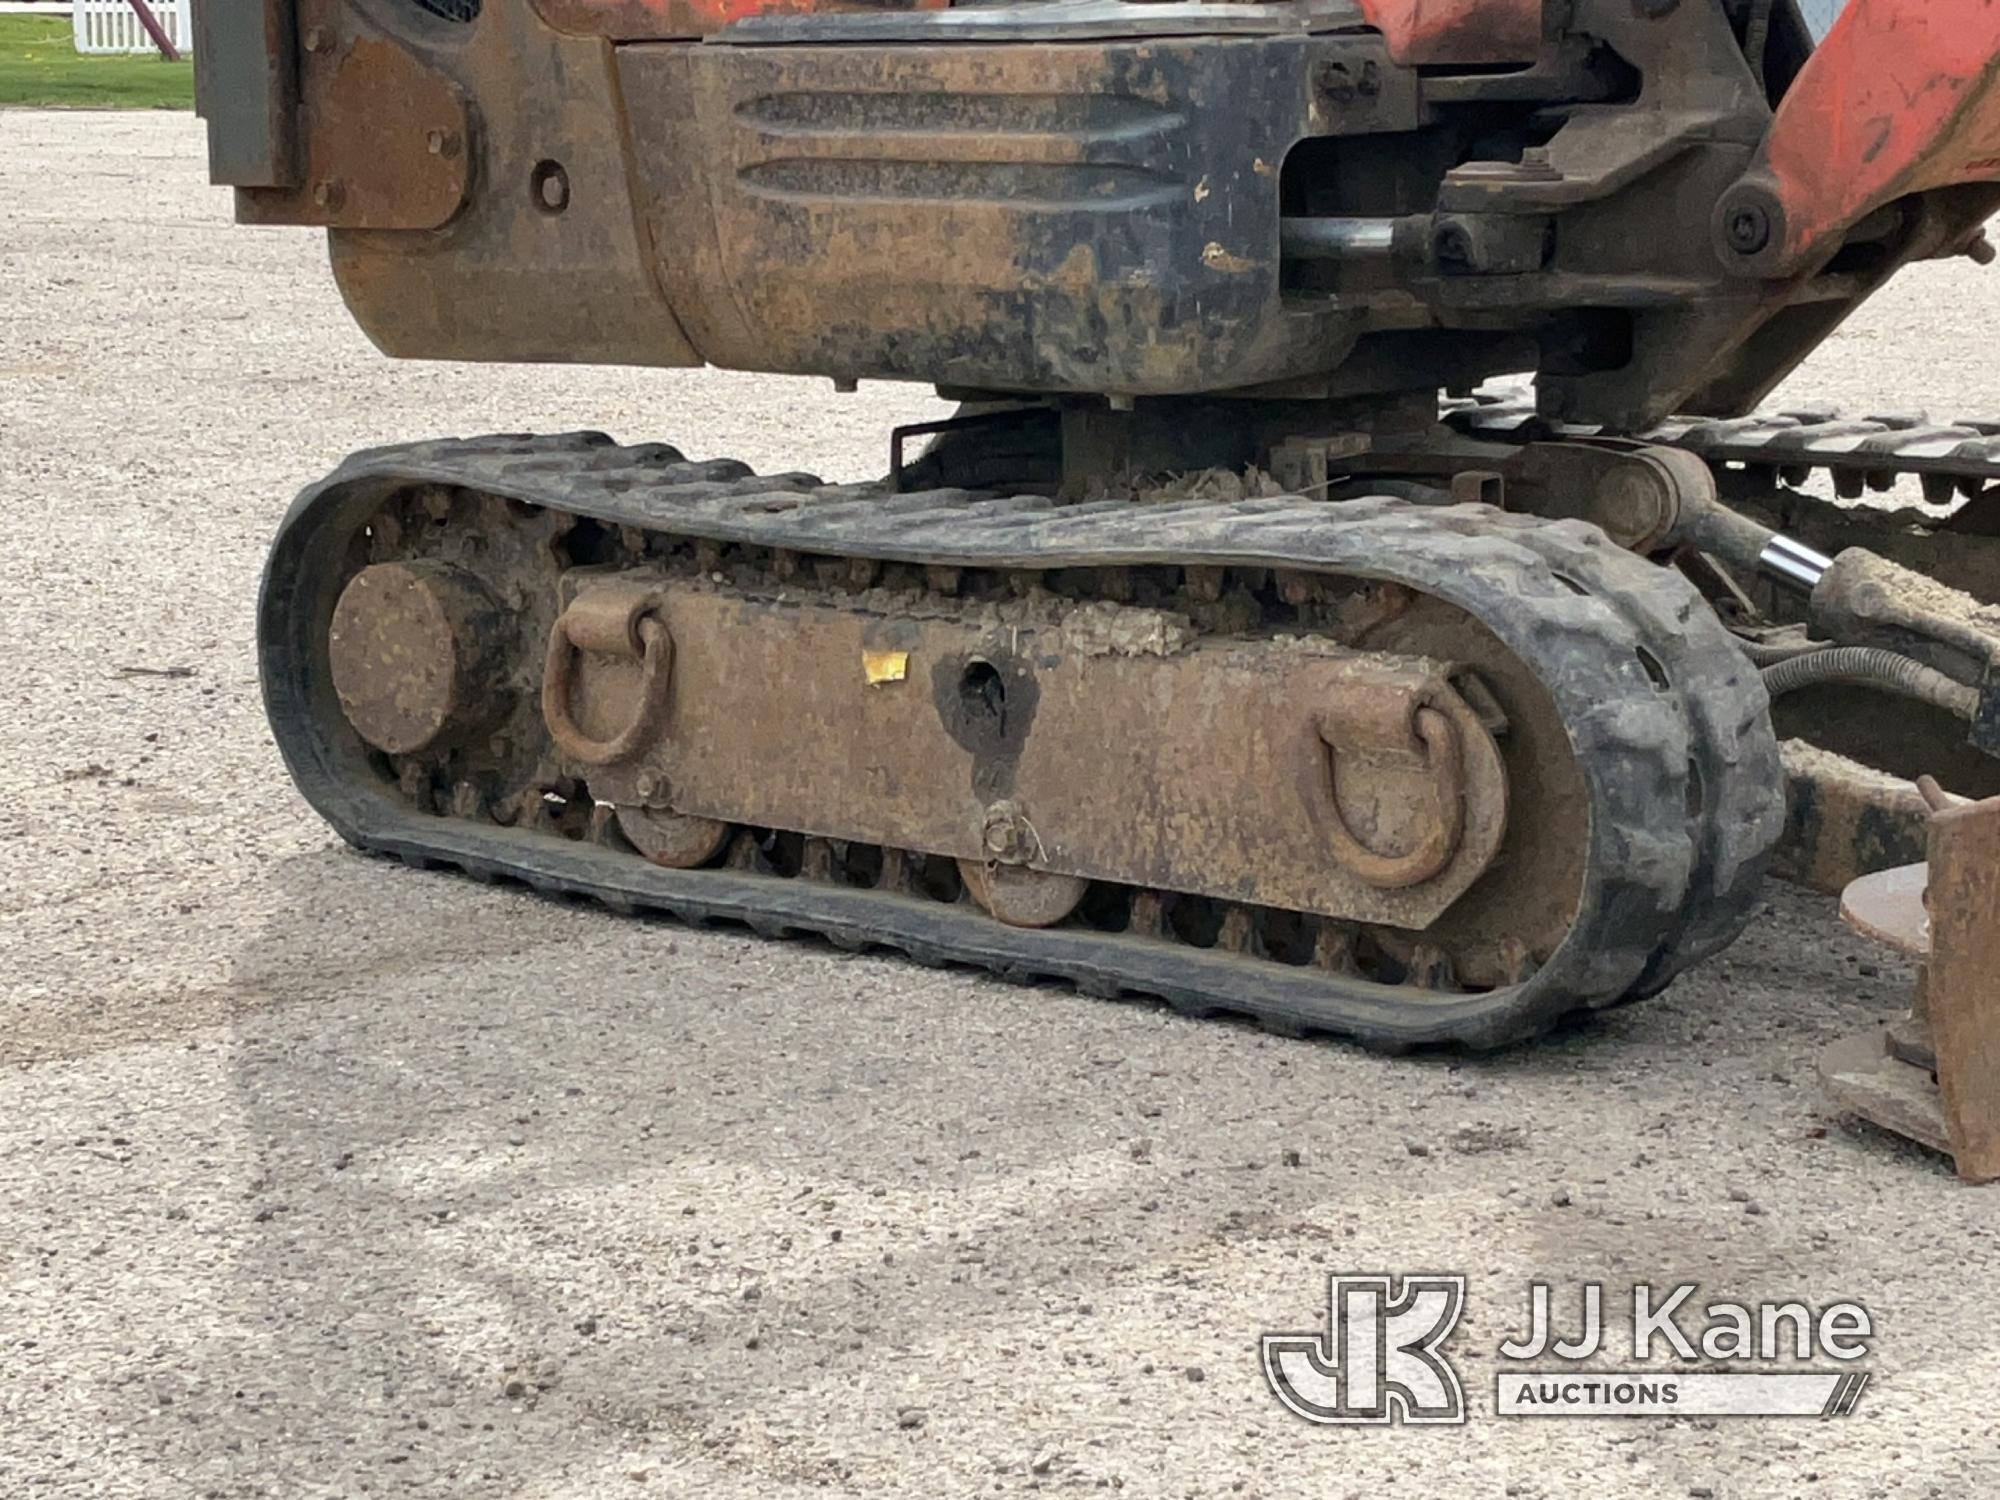 (South Beloit, IL) 2015 Kubota K-008 Mini Hydraulic Excavator Runs, Moves, Operates) (Jump To Start,